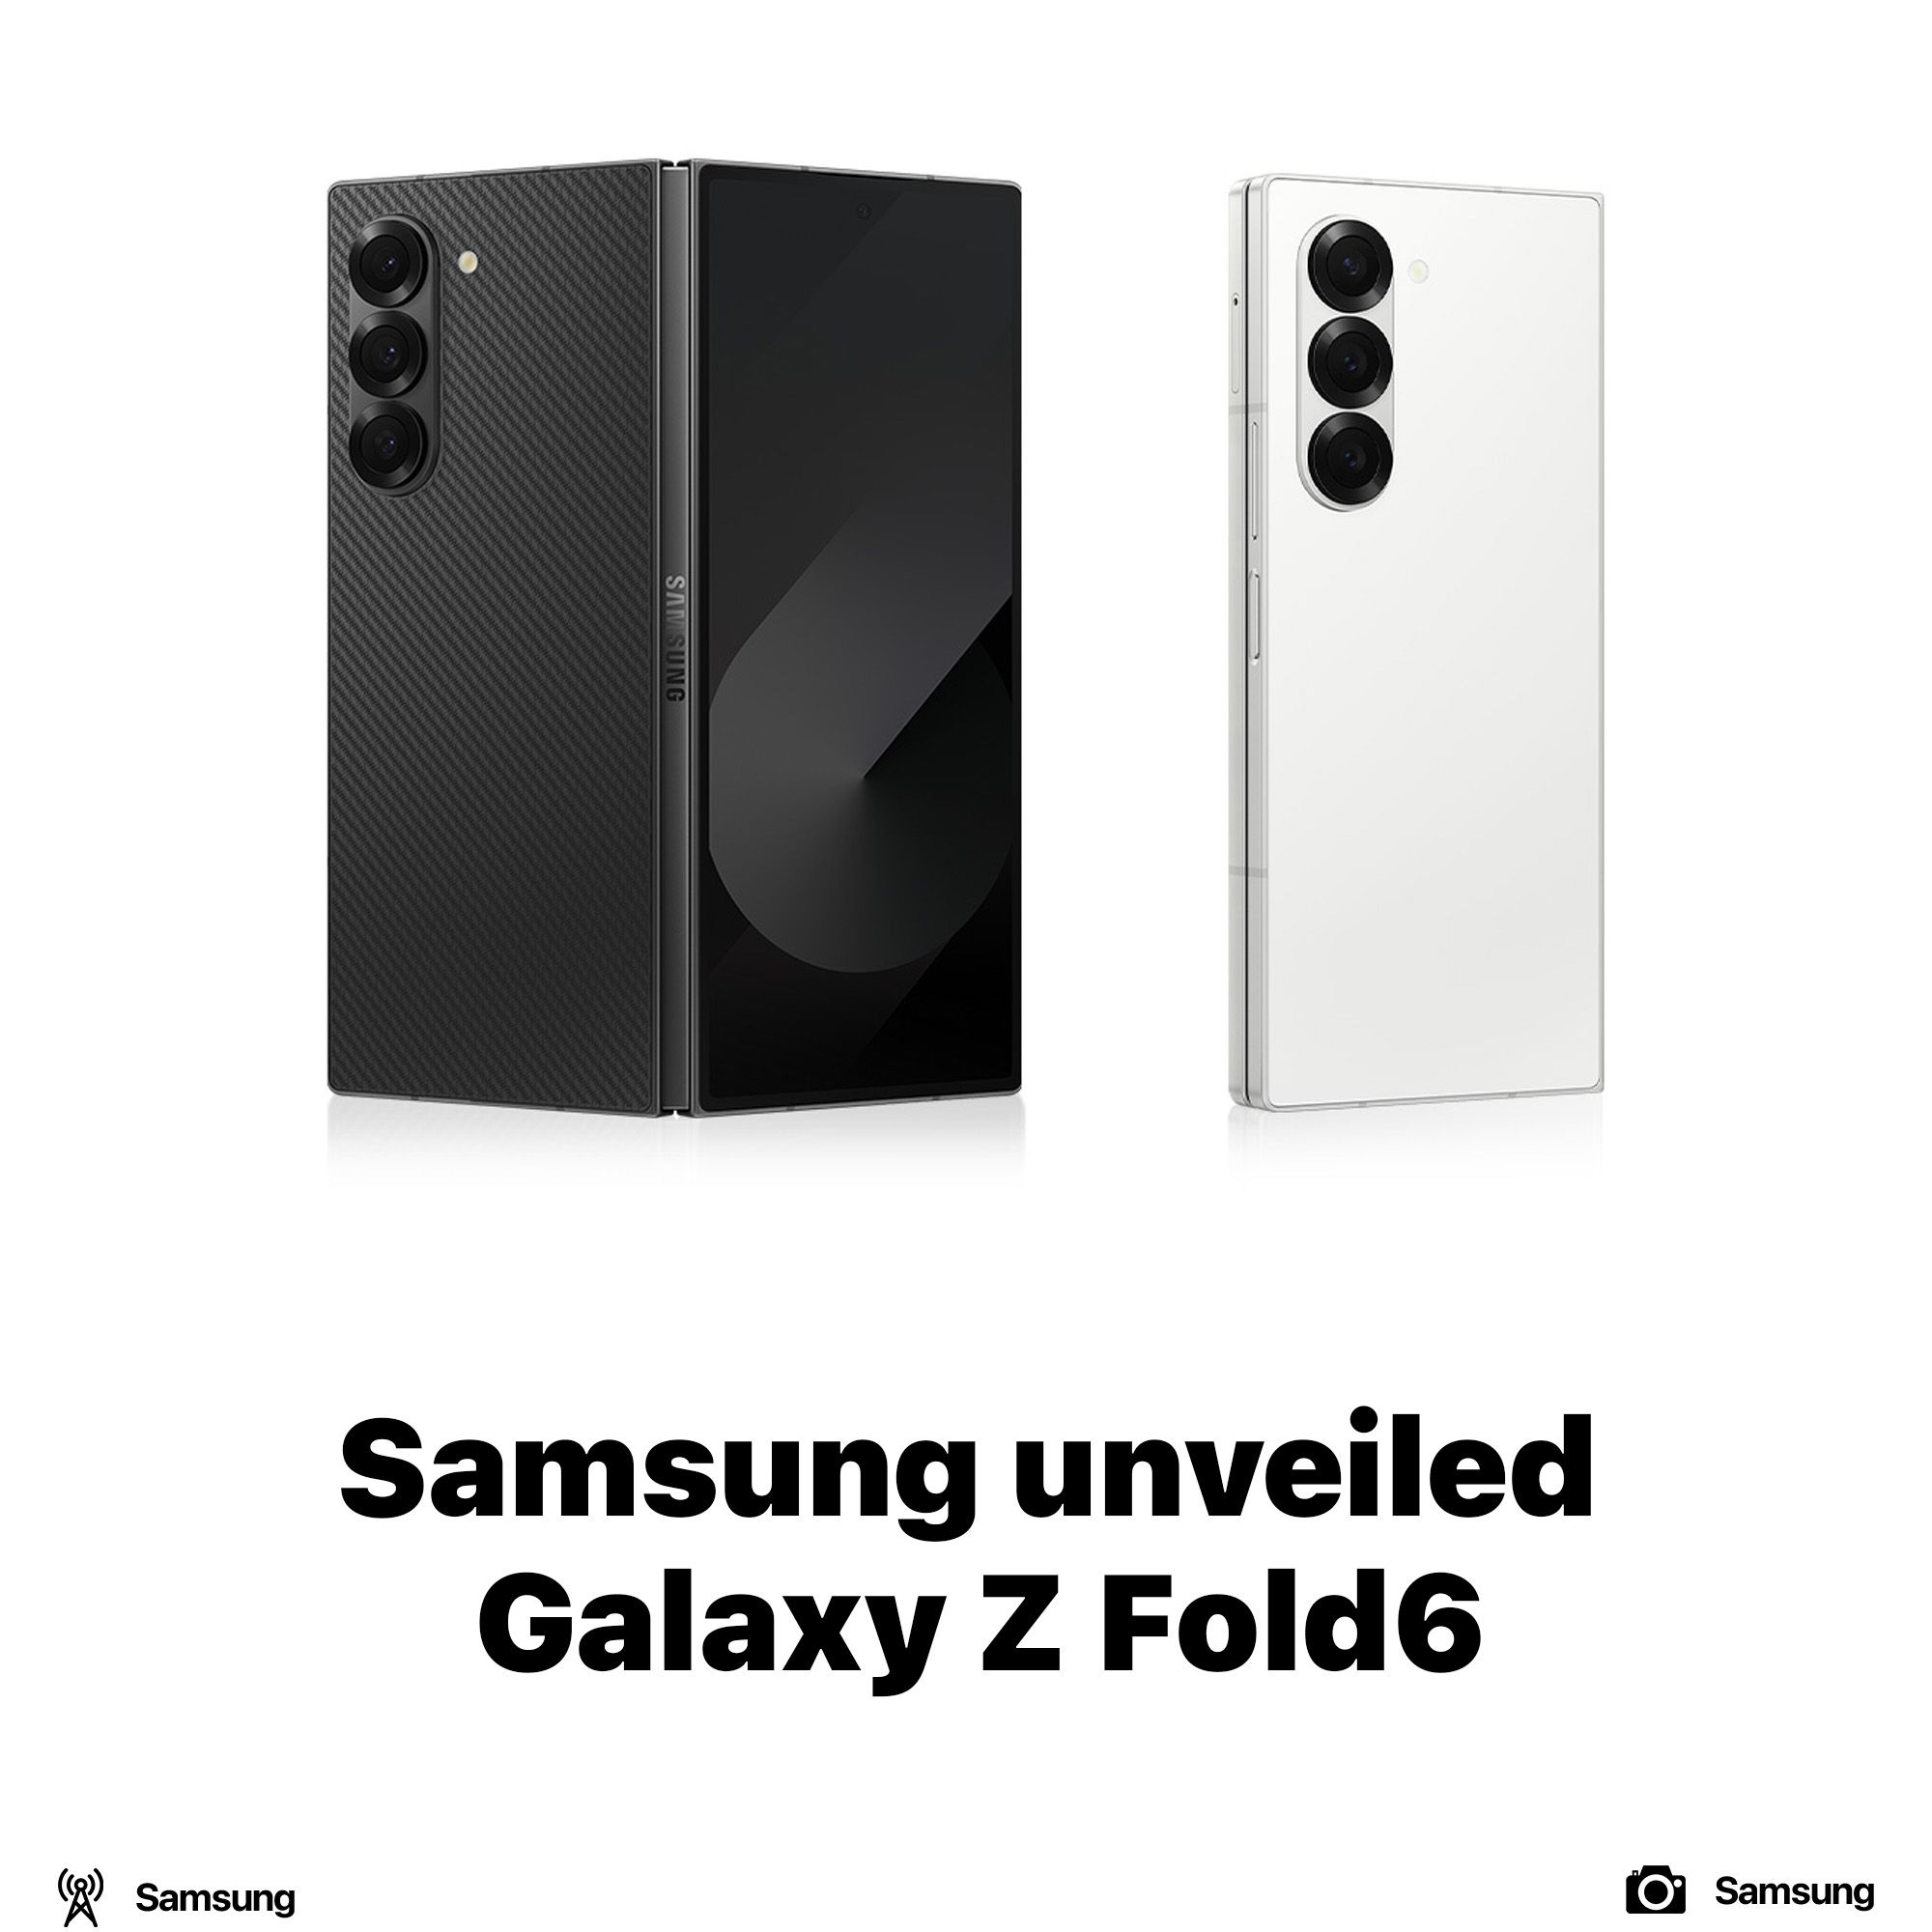 Samsung unveiled Galaxy Z Fold6